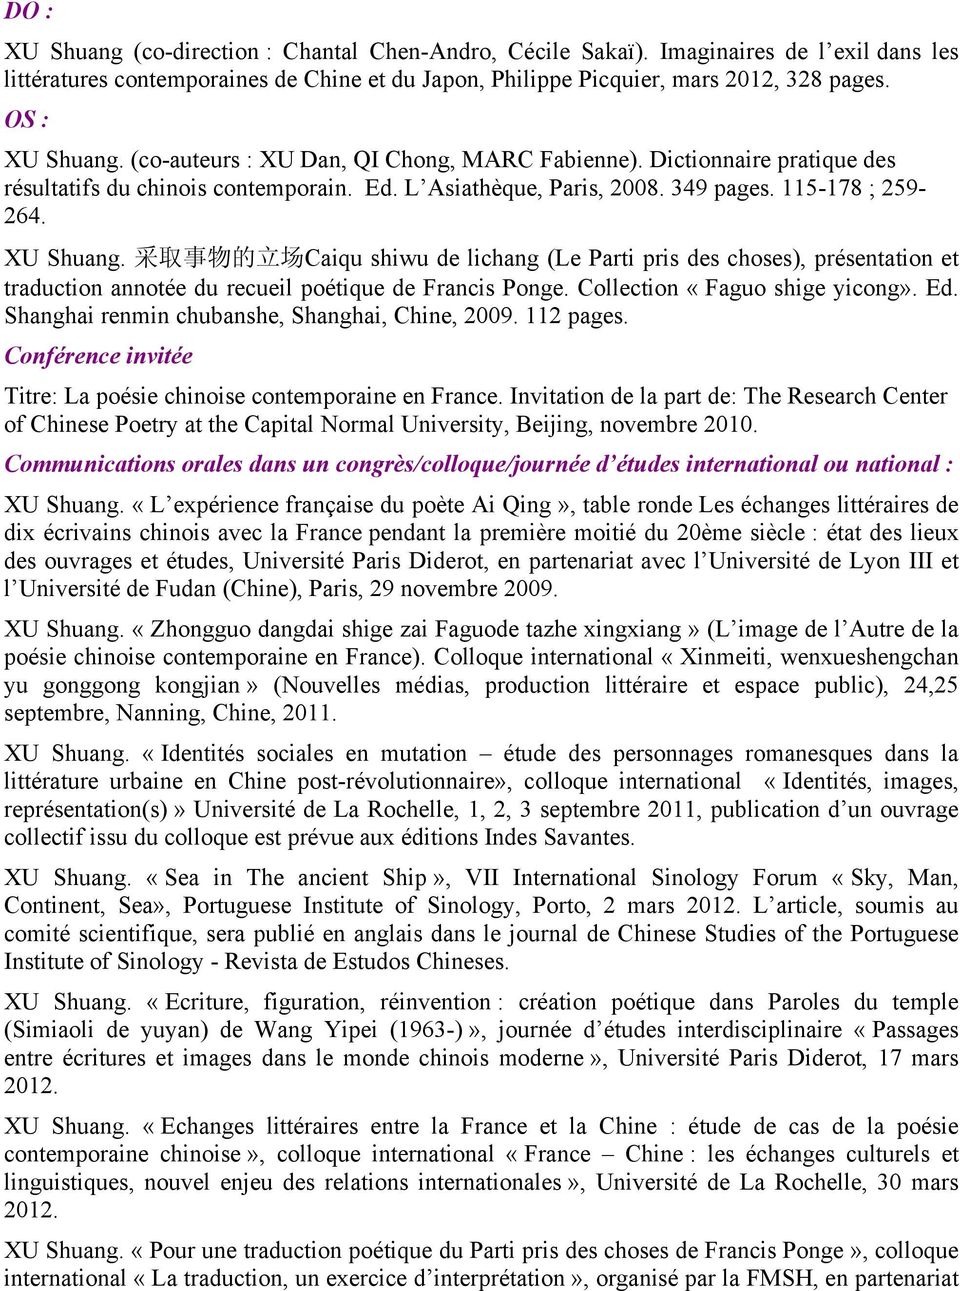 Collection «Faguo shige yicong». Ed. Shanghai renmin chubanshe, Shanghai, Chine, 2009. 112 pages. Conférence invitée Titre: La poésie chinoise contemporaine en France.